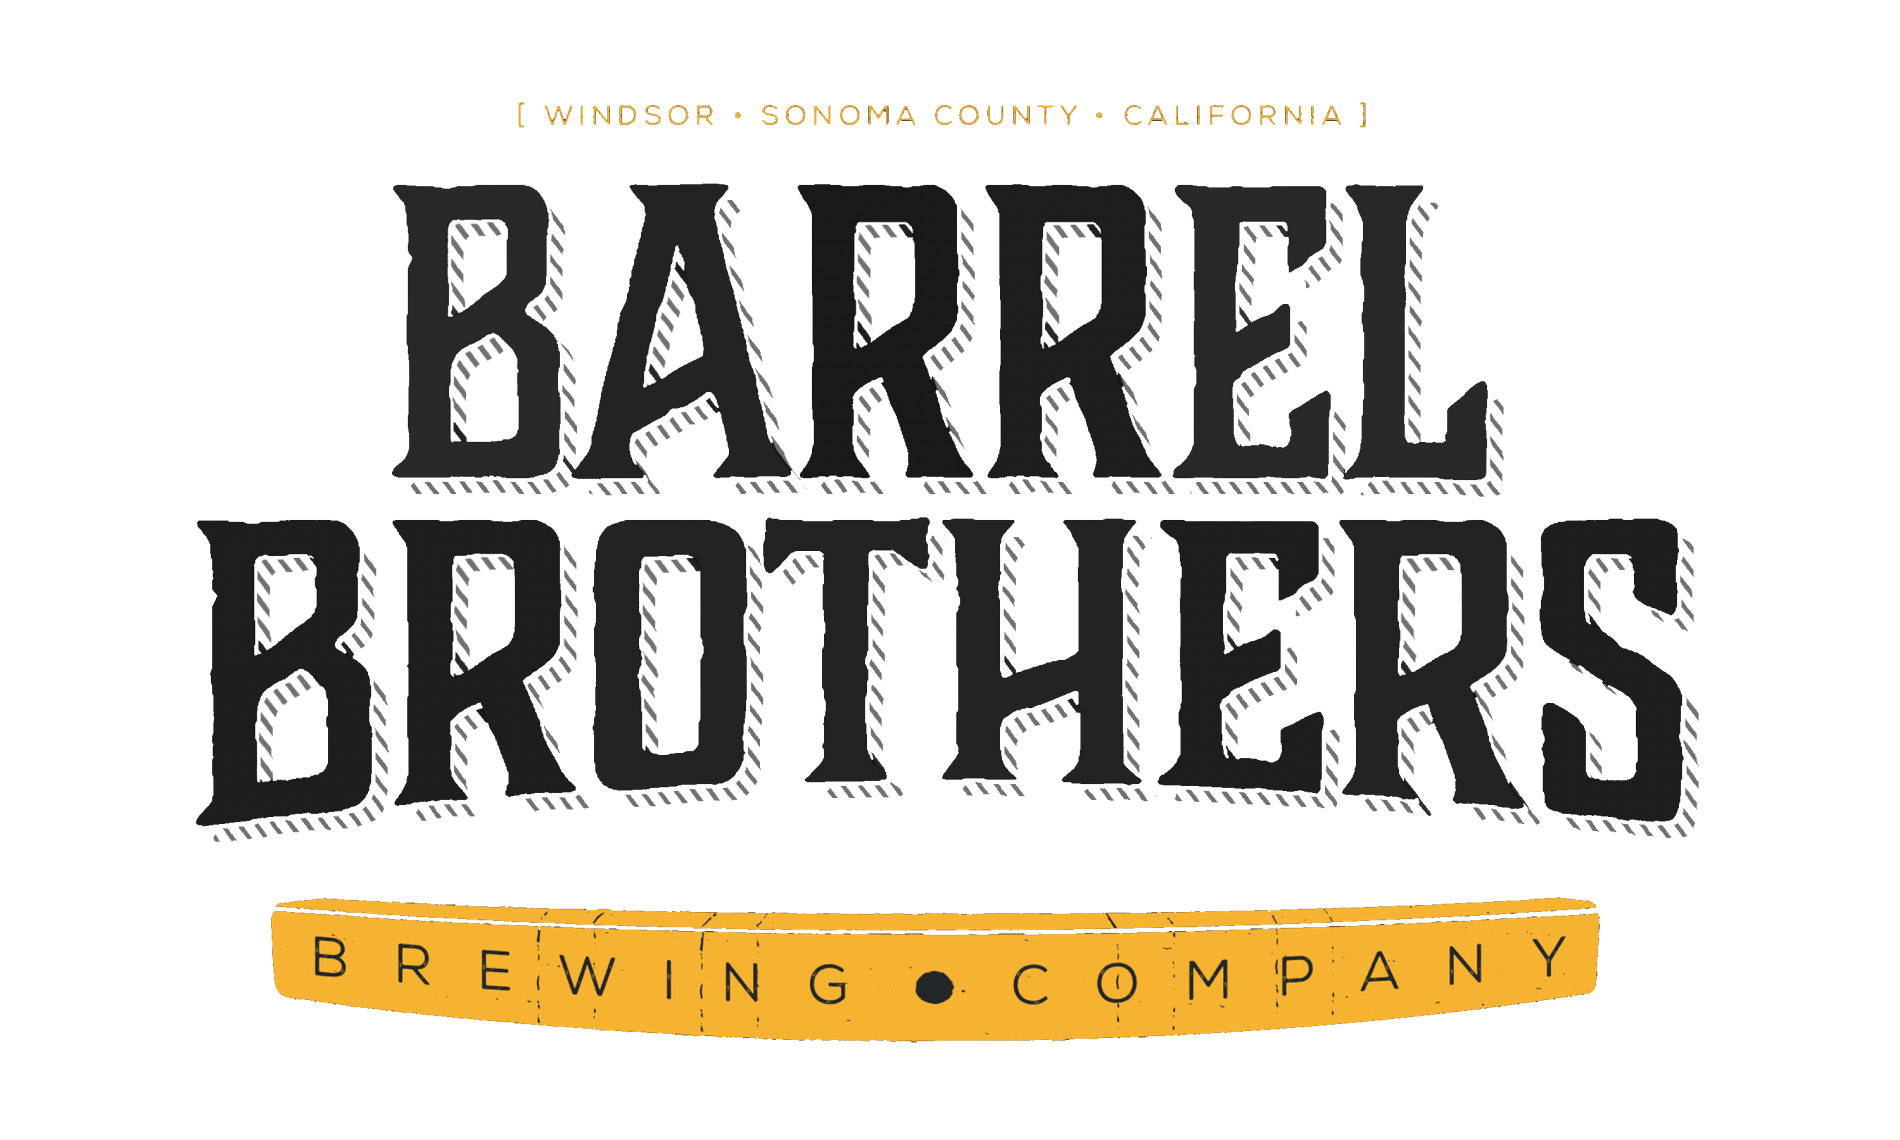 Barrel Brothers Brewing Company